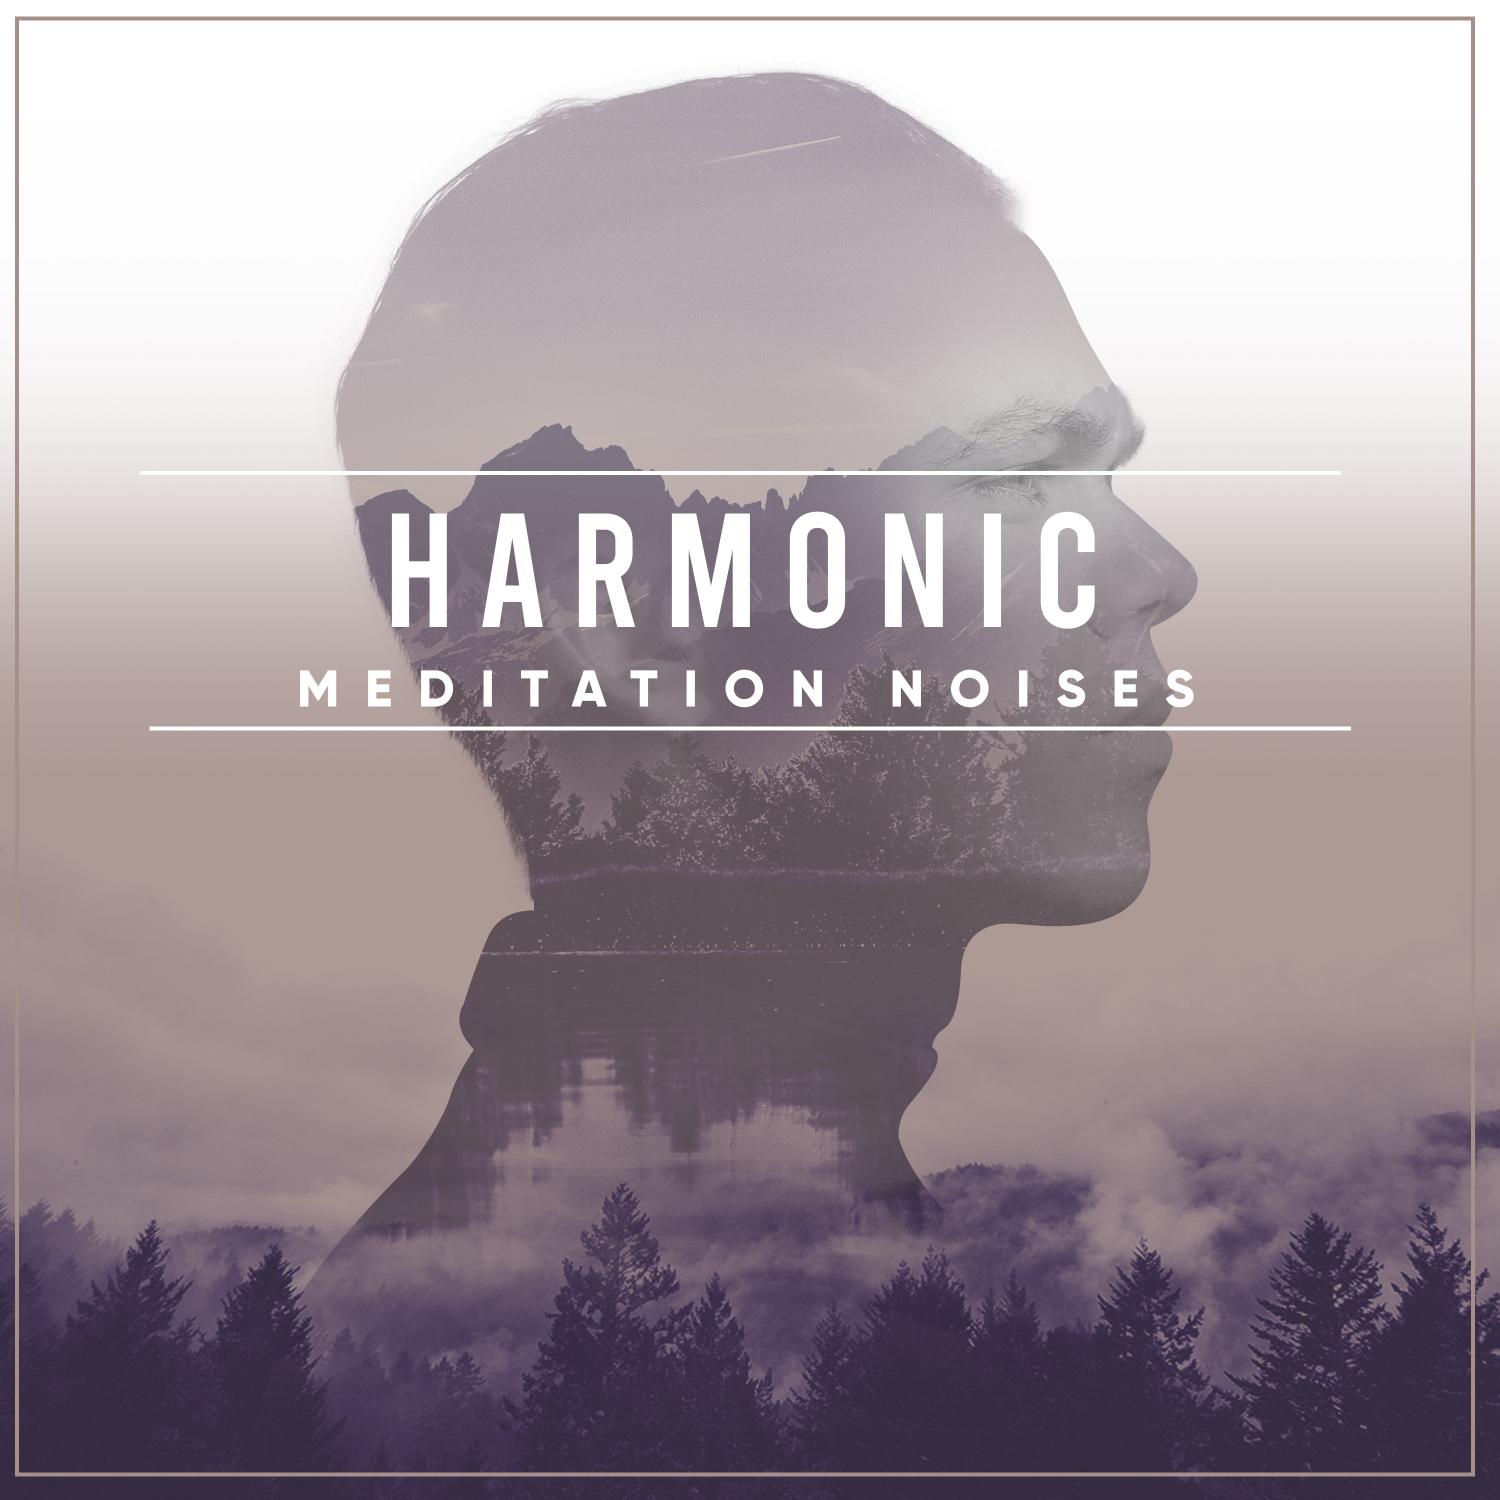 18 Harmonic Noises for Meditation, Yoga & Spa